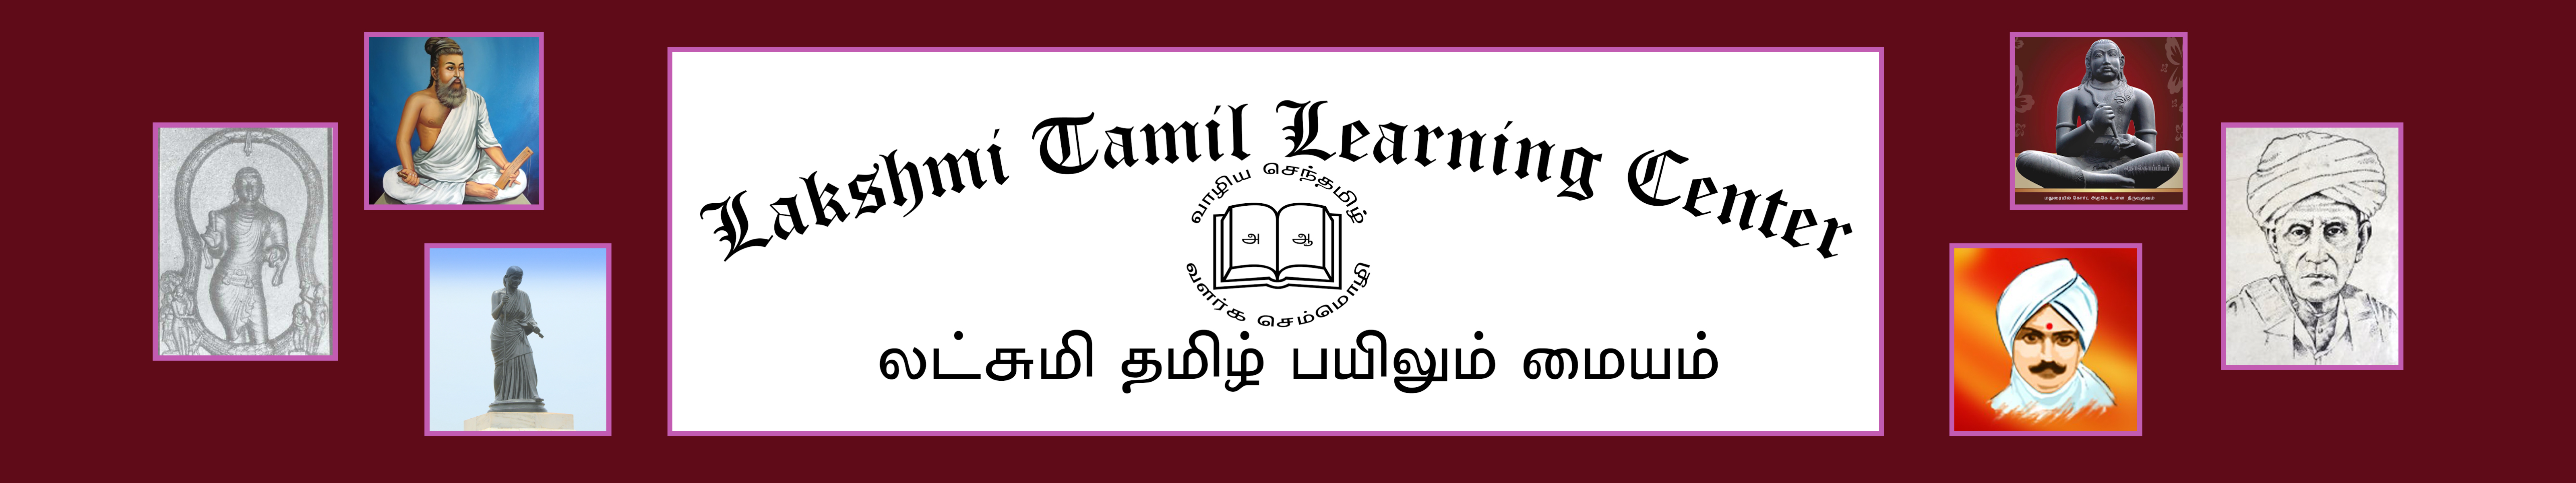 Lakshmi Tamil Learning Center